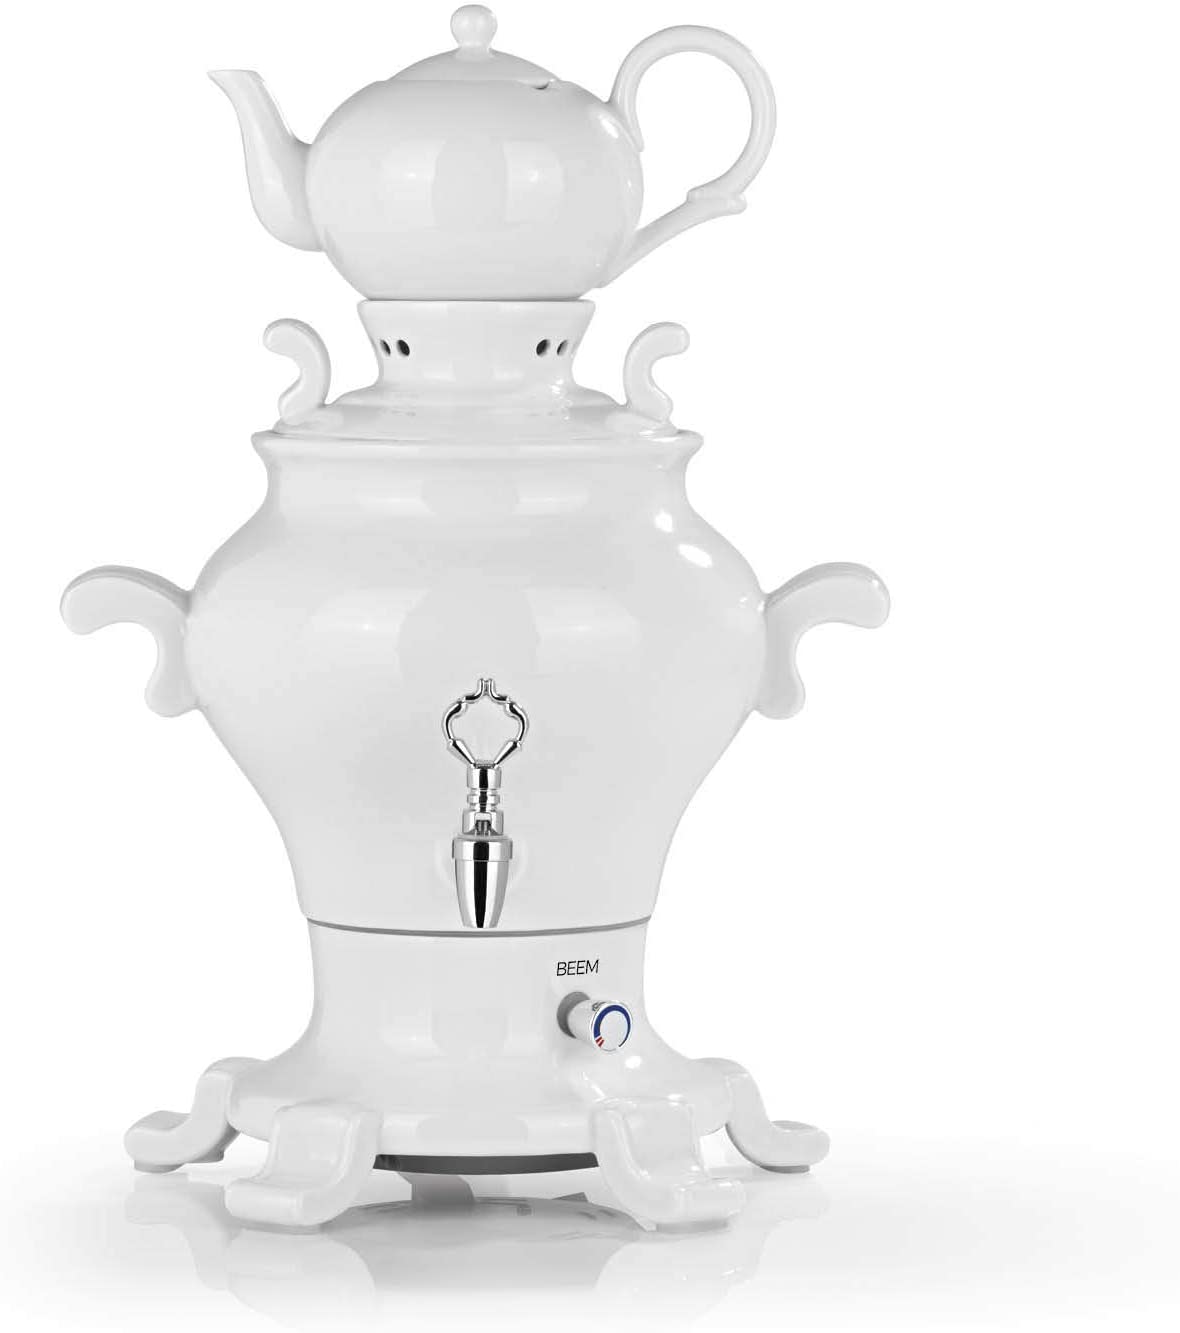 BEEM ODETTE BLANC Samowar - 5 Litres | Porcelain | 1800 W | 1 L Teapot with Strainer Stainless Steel